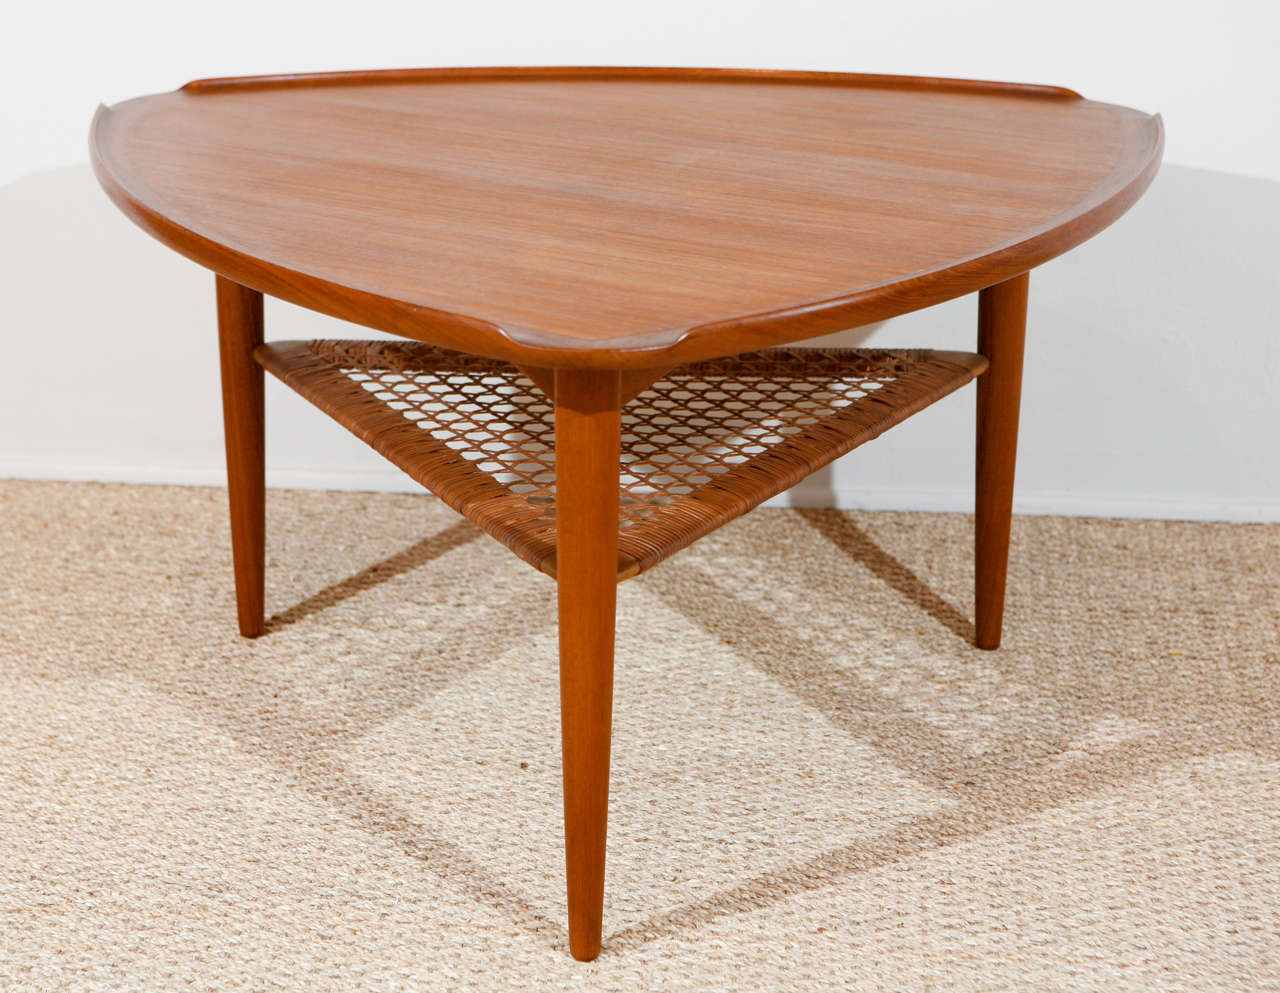 Original Danish Modern table.  Identifying label on bottom as shown.  Polished teak with triangle cane shelf.